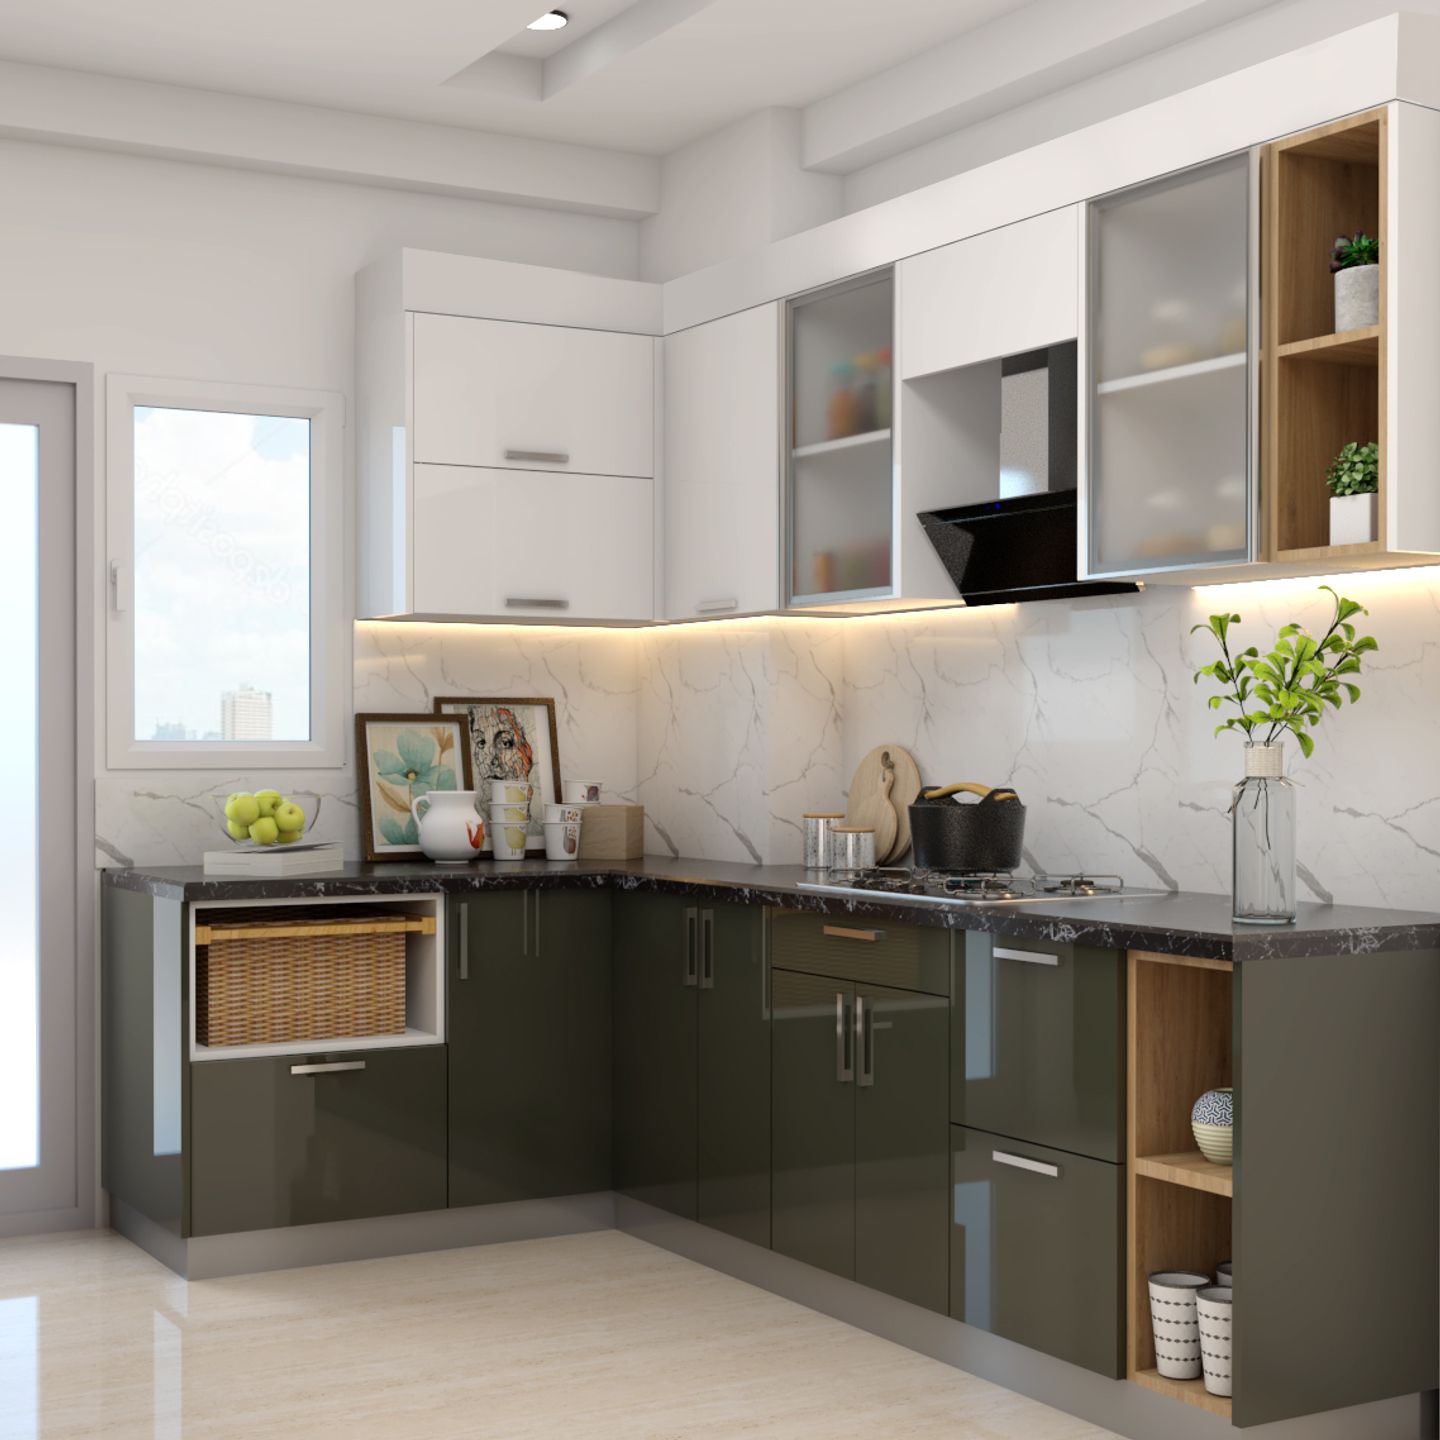 Green And White Kitchen Design Idea - Livspace